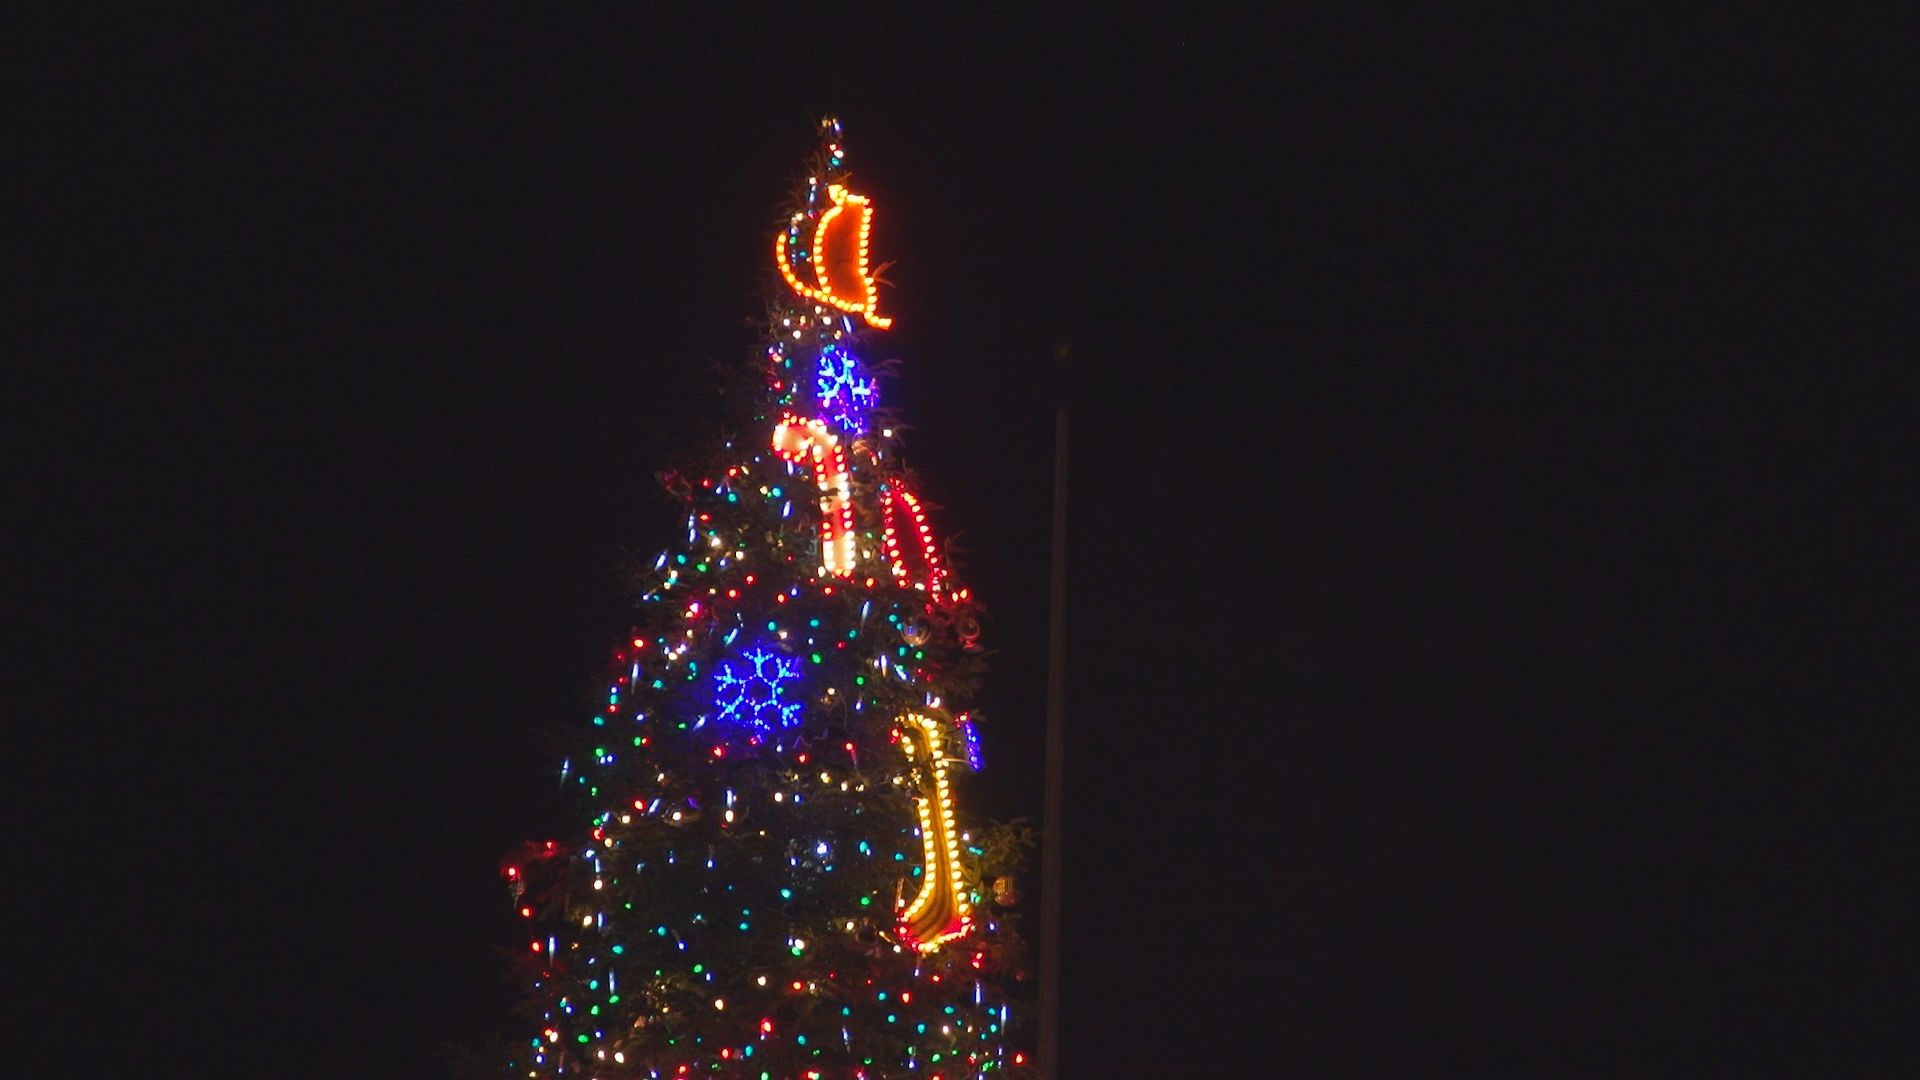 Old Sacramento Holiday Tree lights up, kicking off holiday season